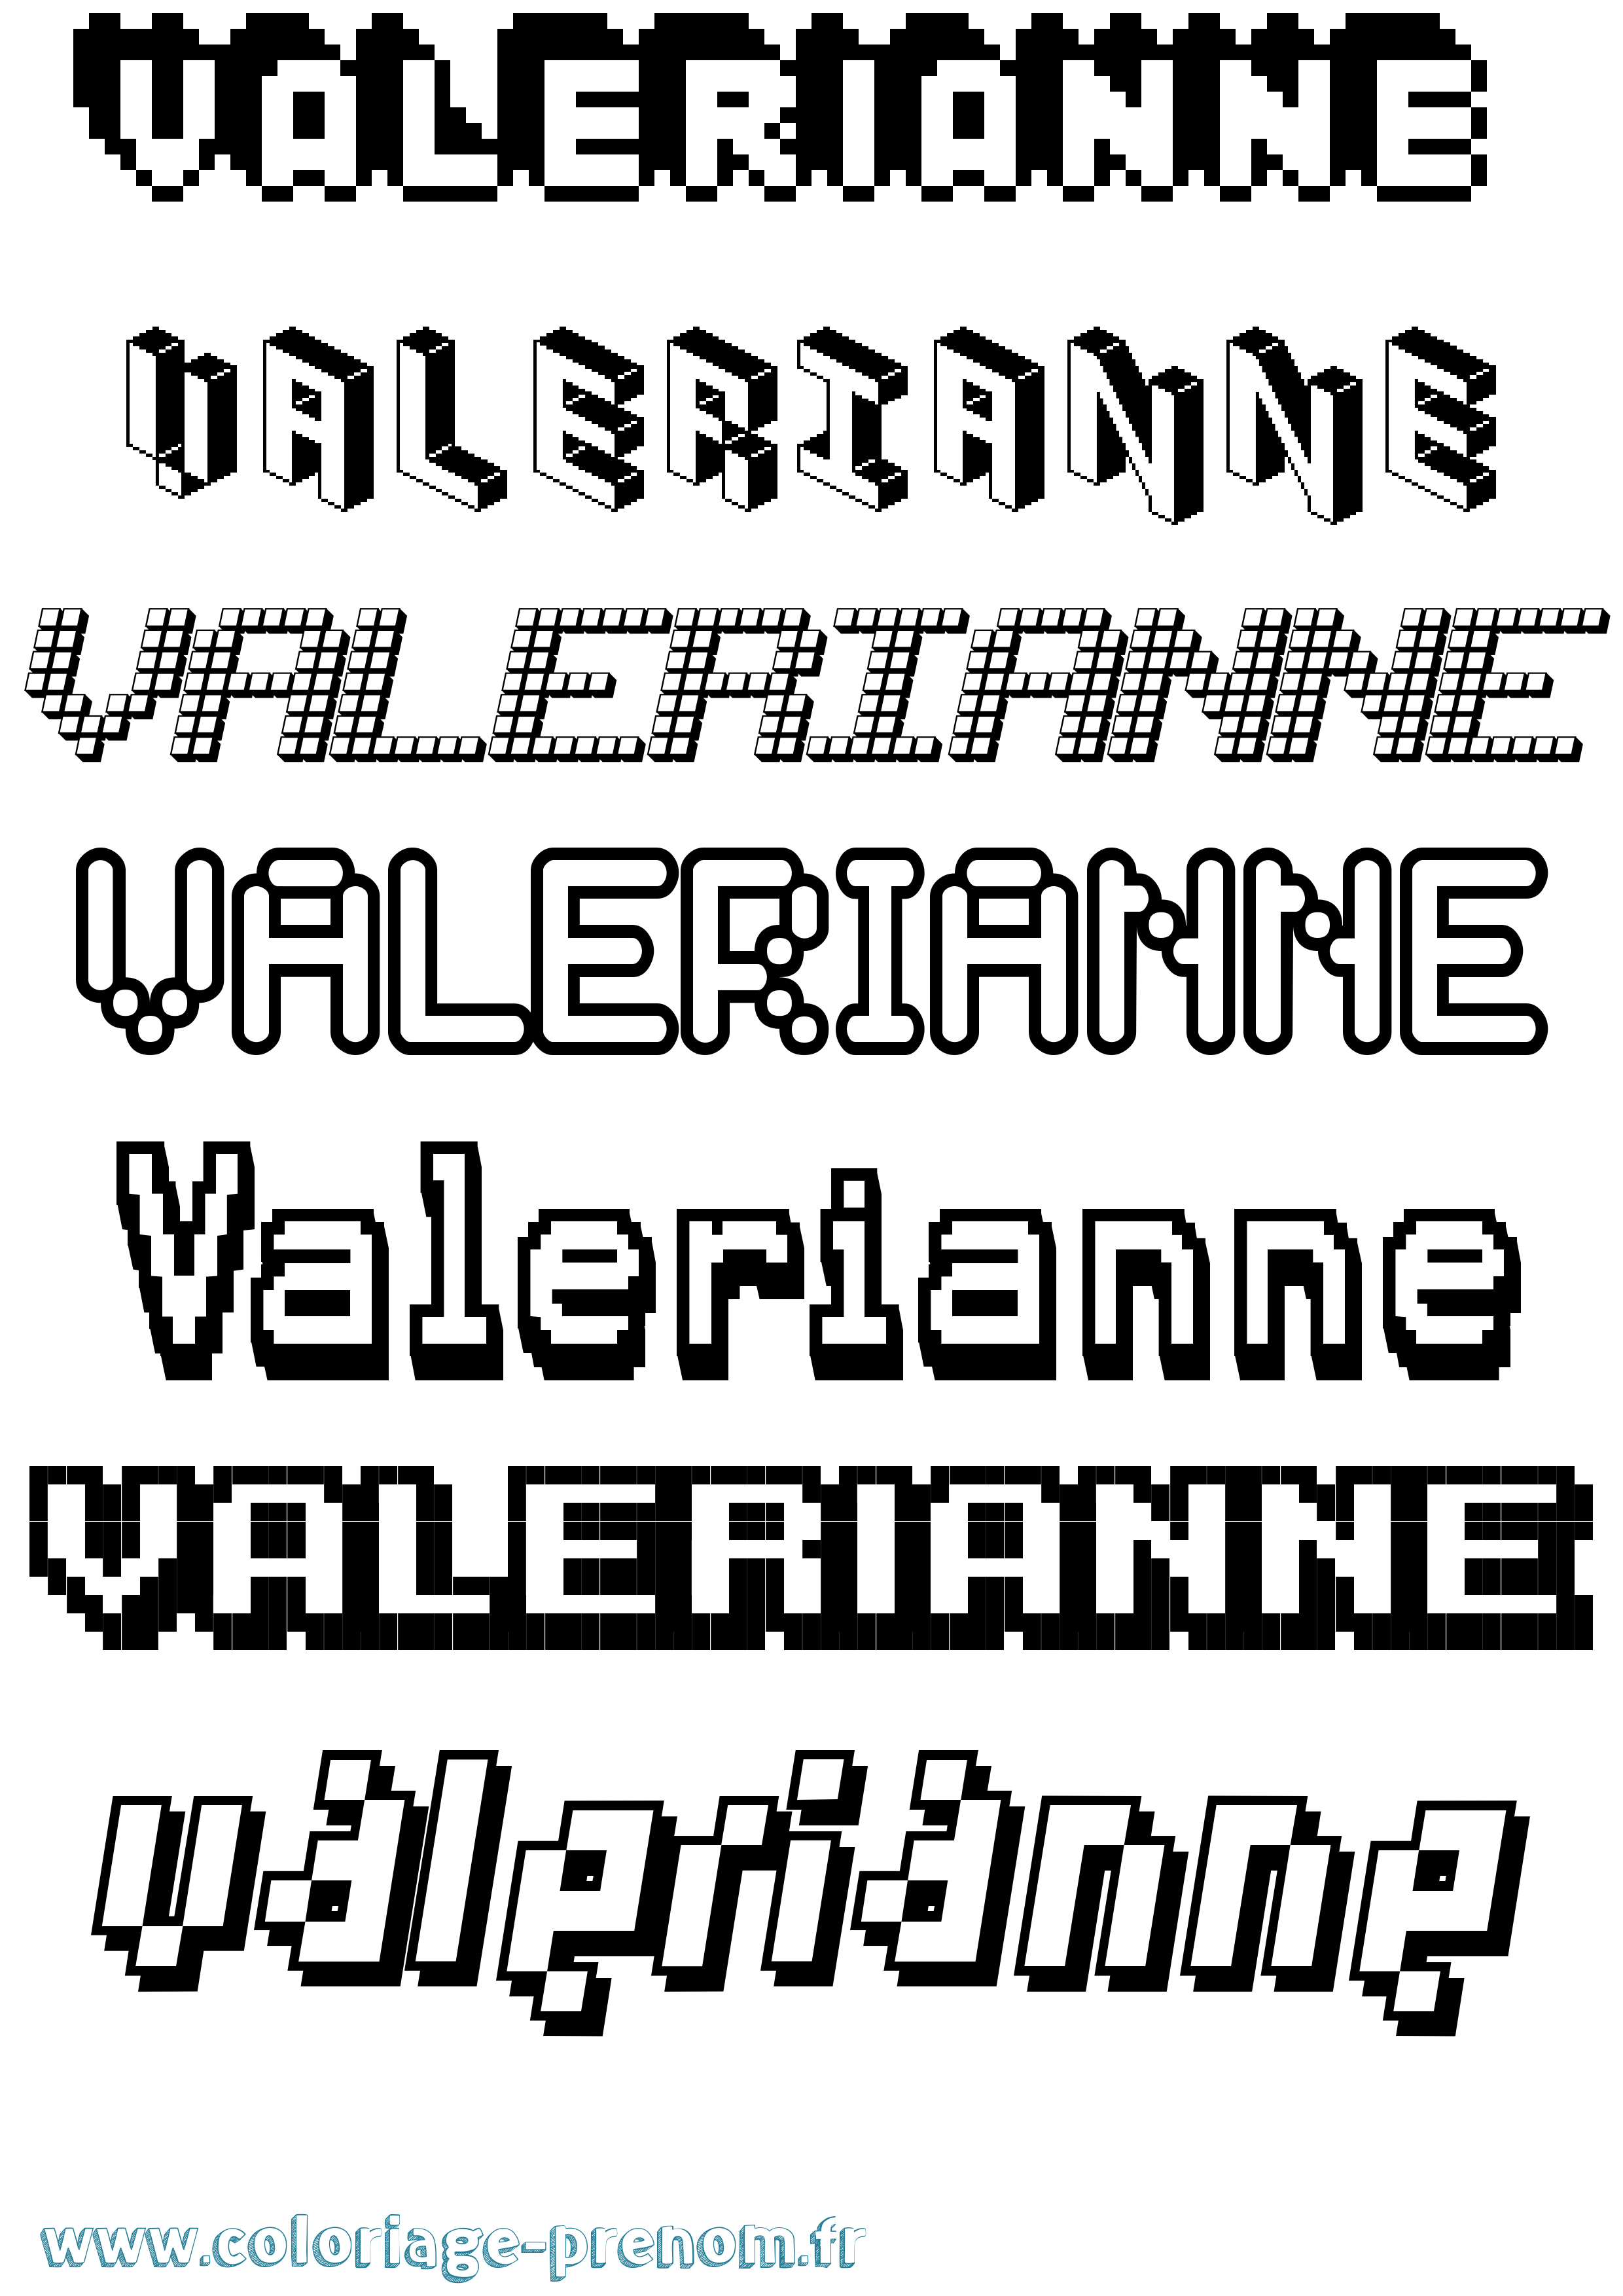 Coloriage prénom Valerianne Pixel